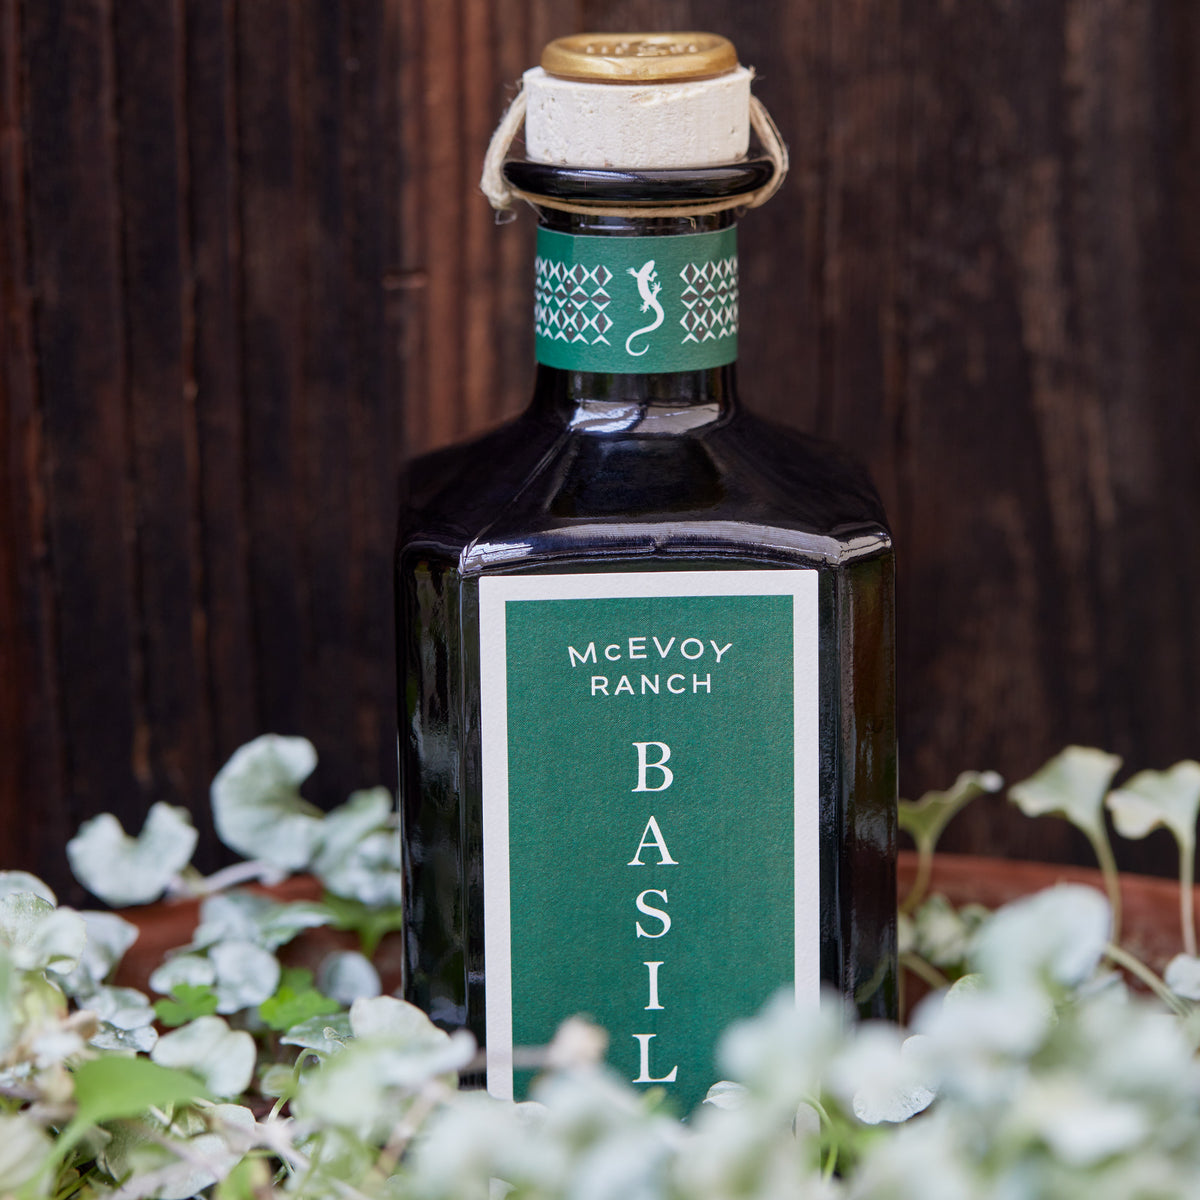 Basil Olive Oil